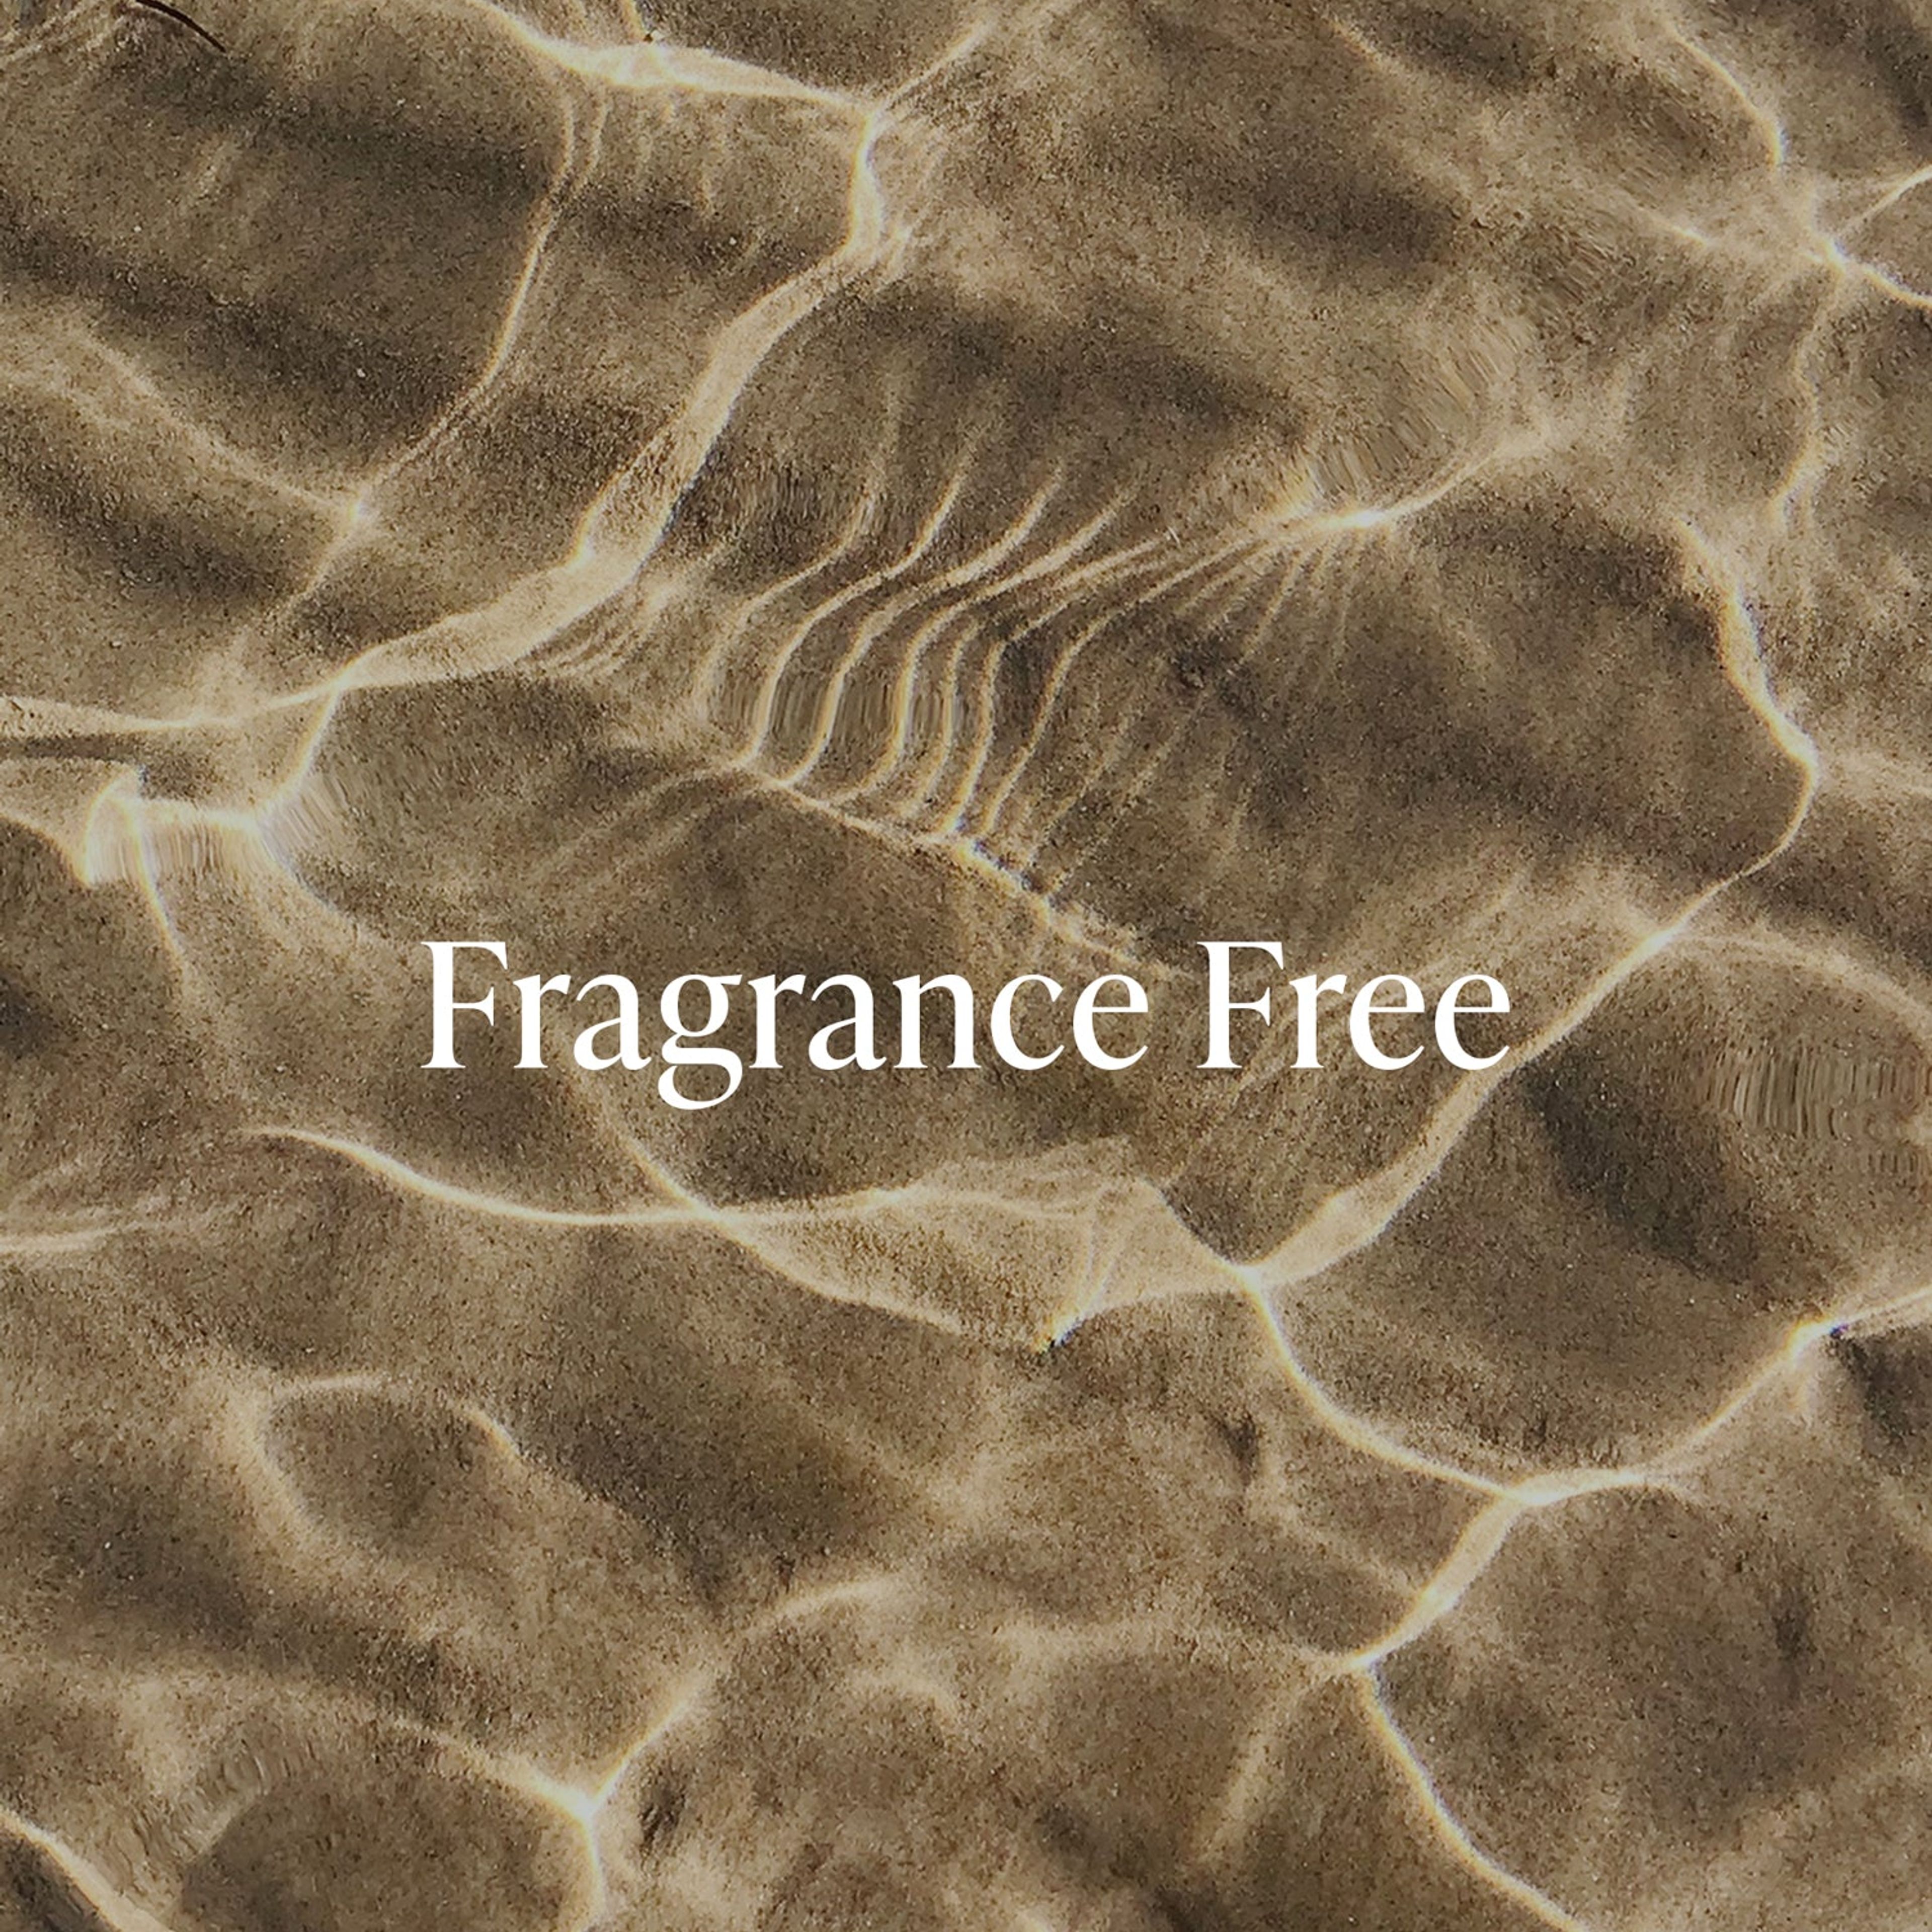 Fragrance Free - Serum Deodorant